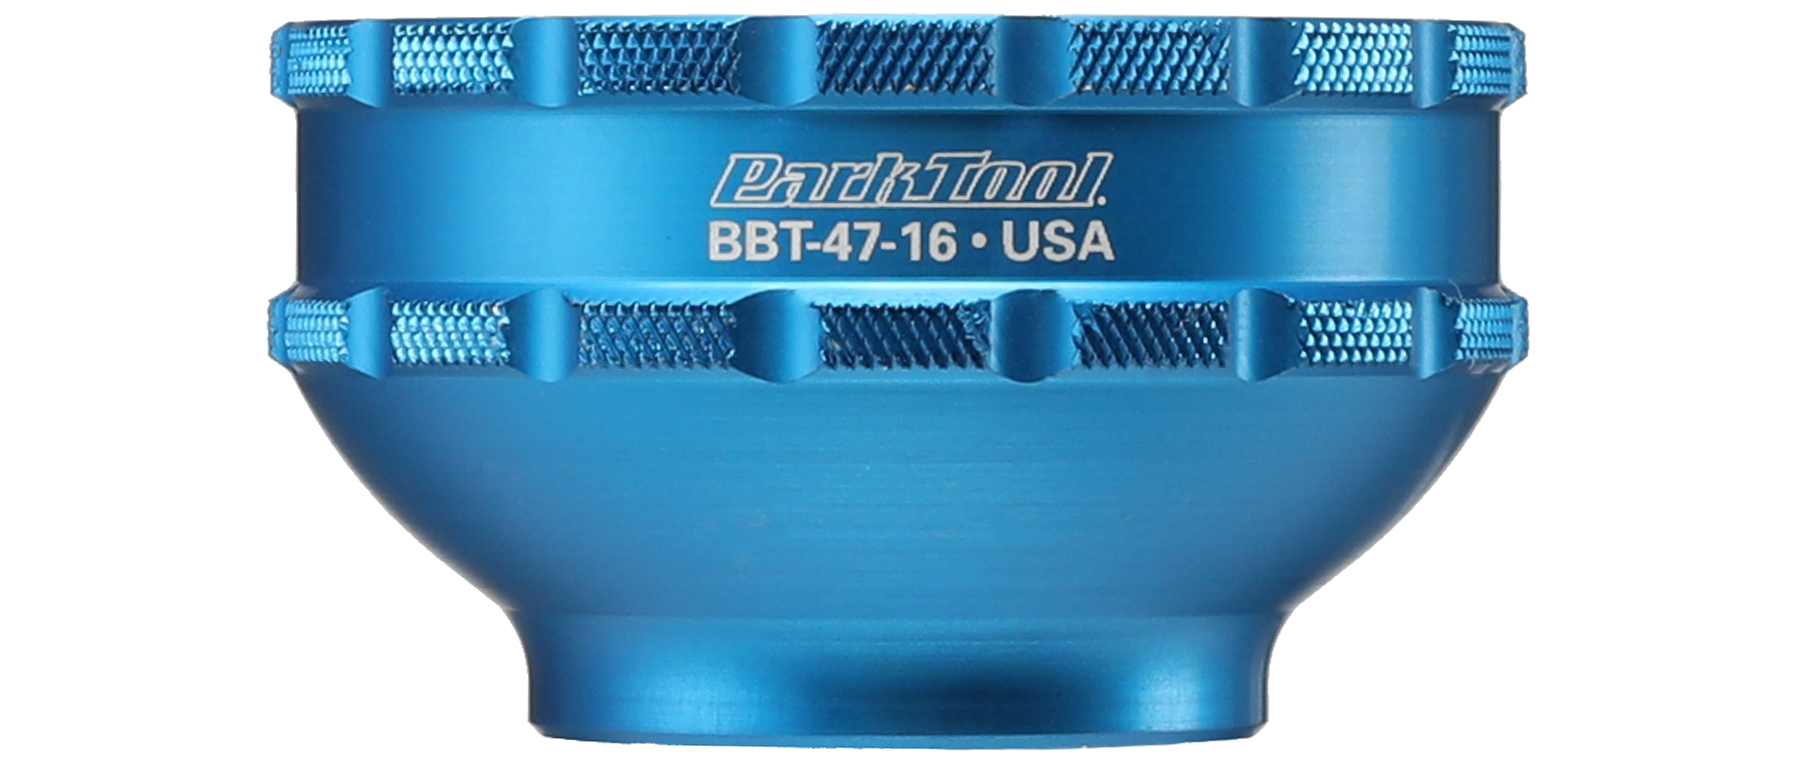 Park Tool BBT-47-16 Bottom Bracket Tool